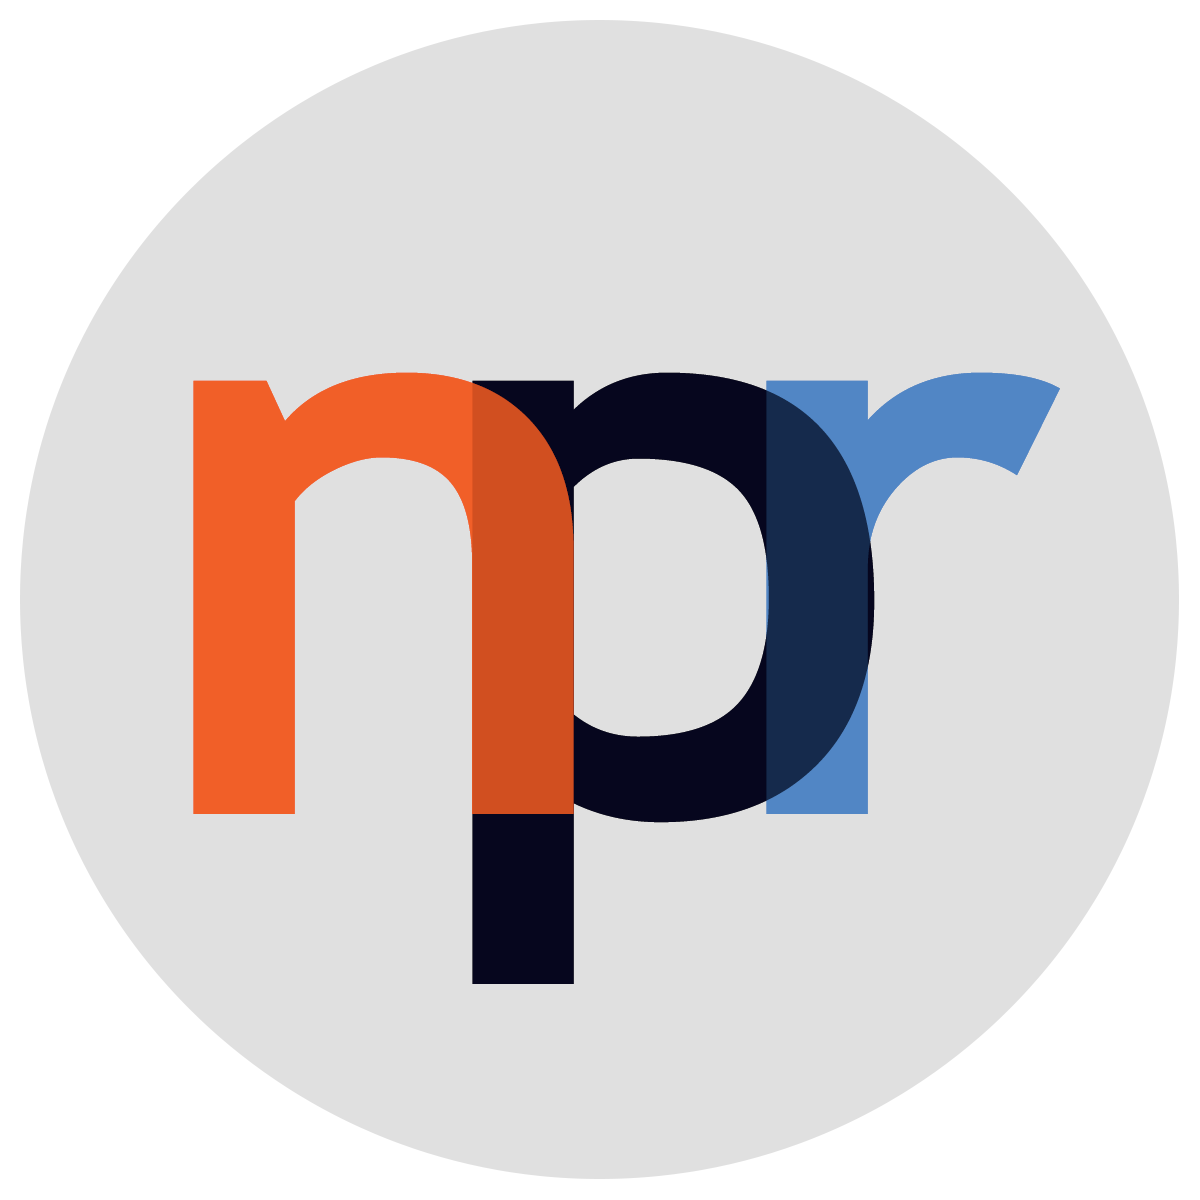 NPR Logo - Updated the NPR logo for fun - Imgur